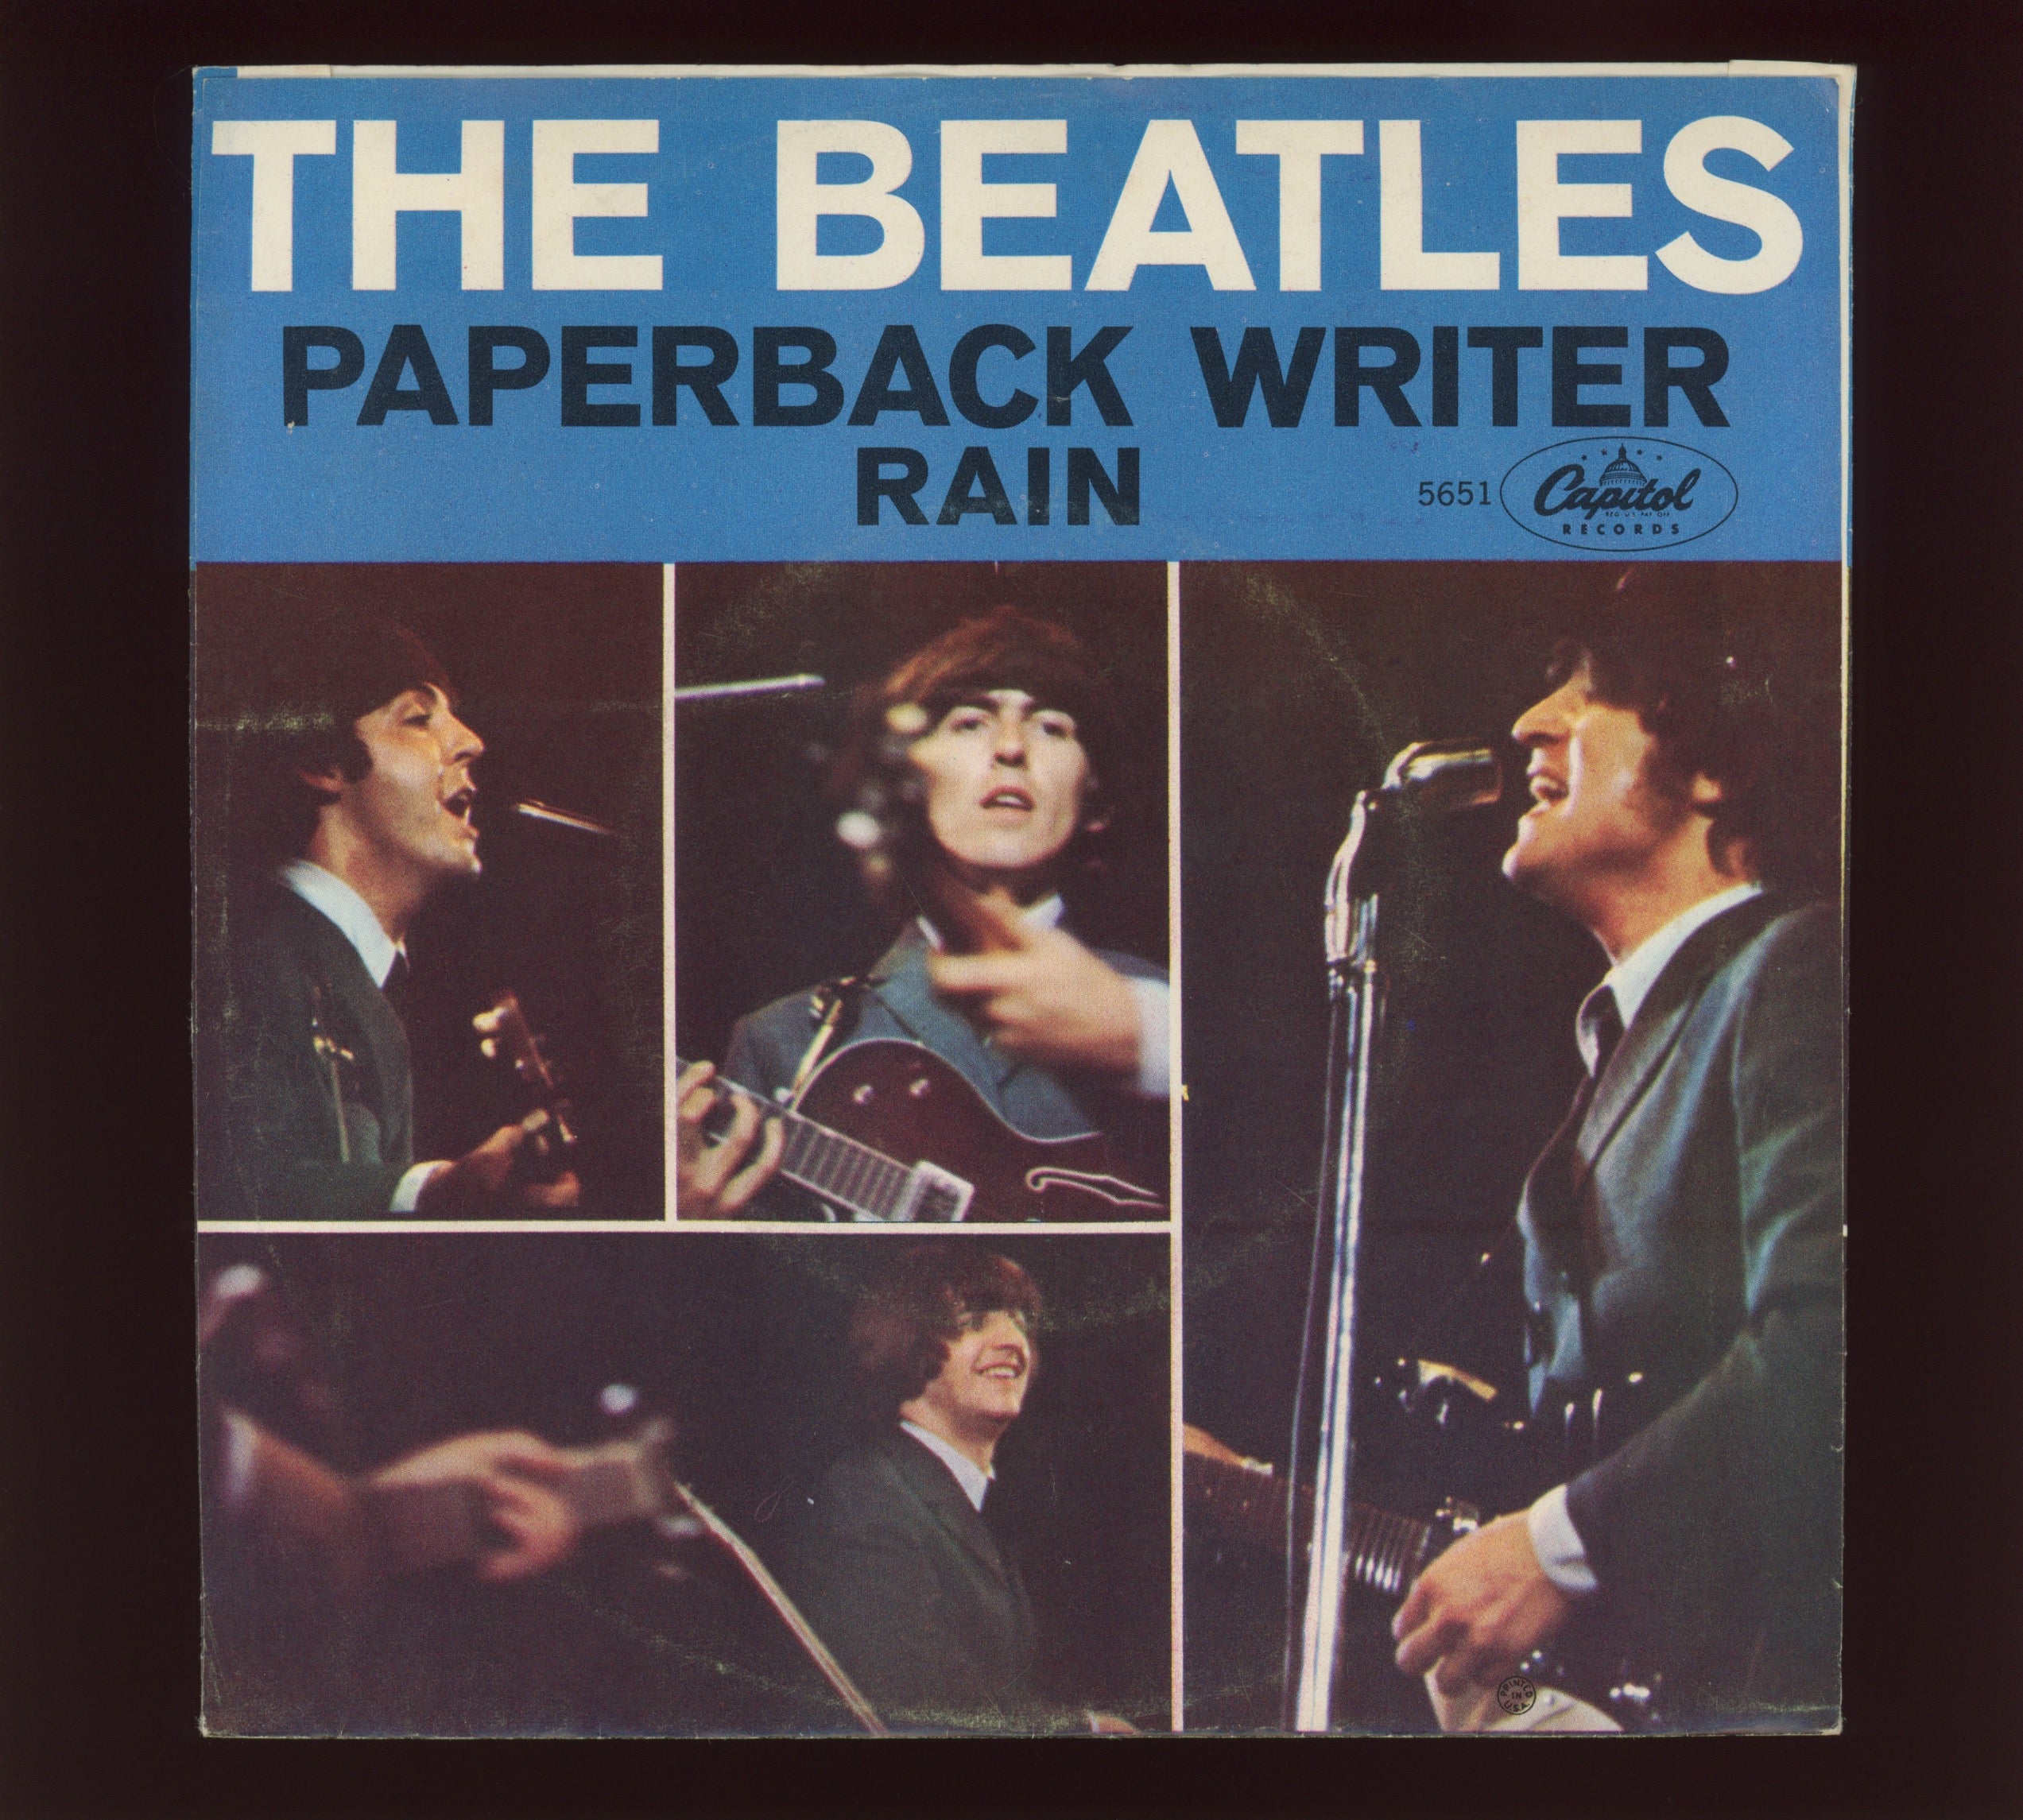 The Beatles - Paperback Writer / Rain on Capitol